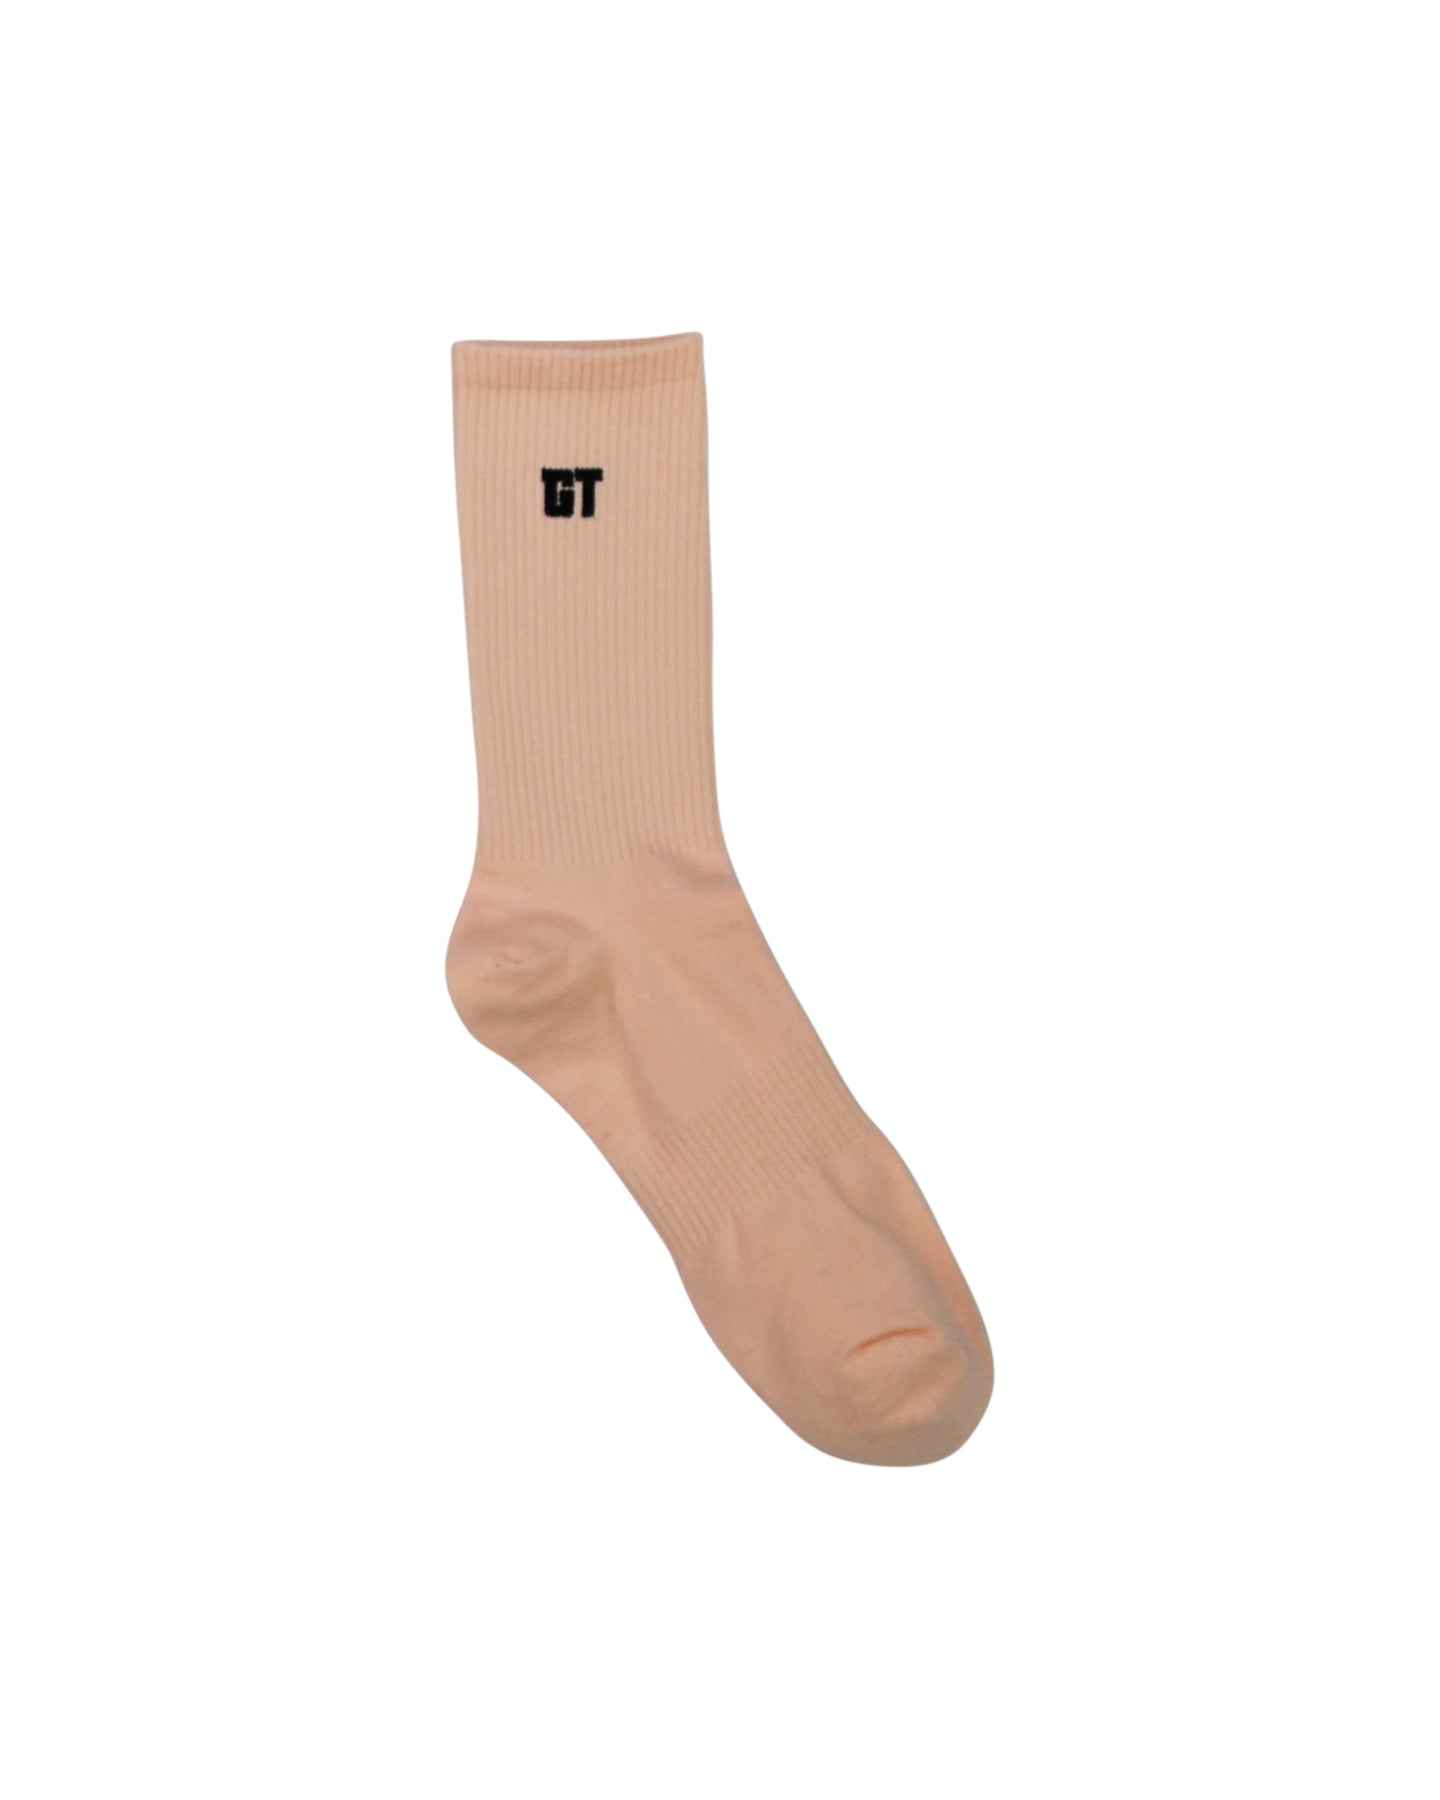 GT Pink Socks